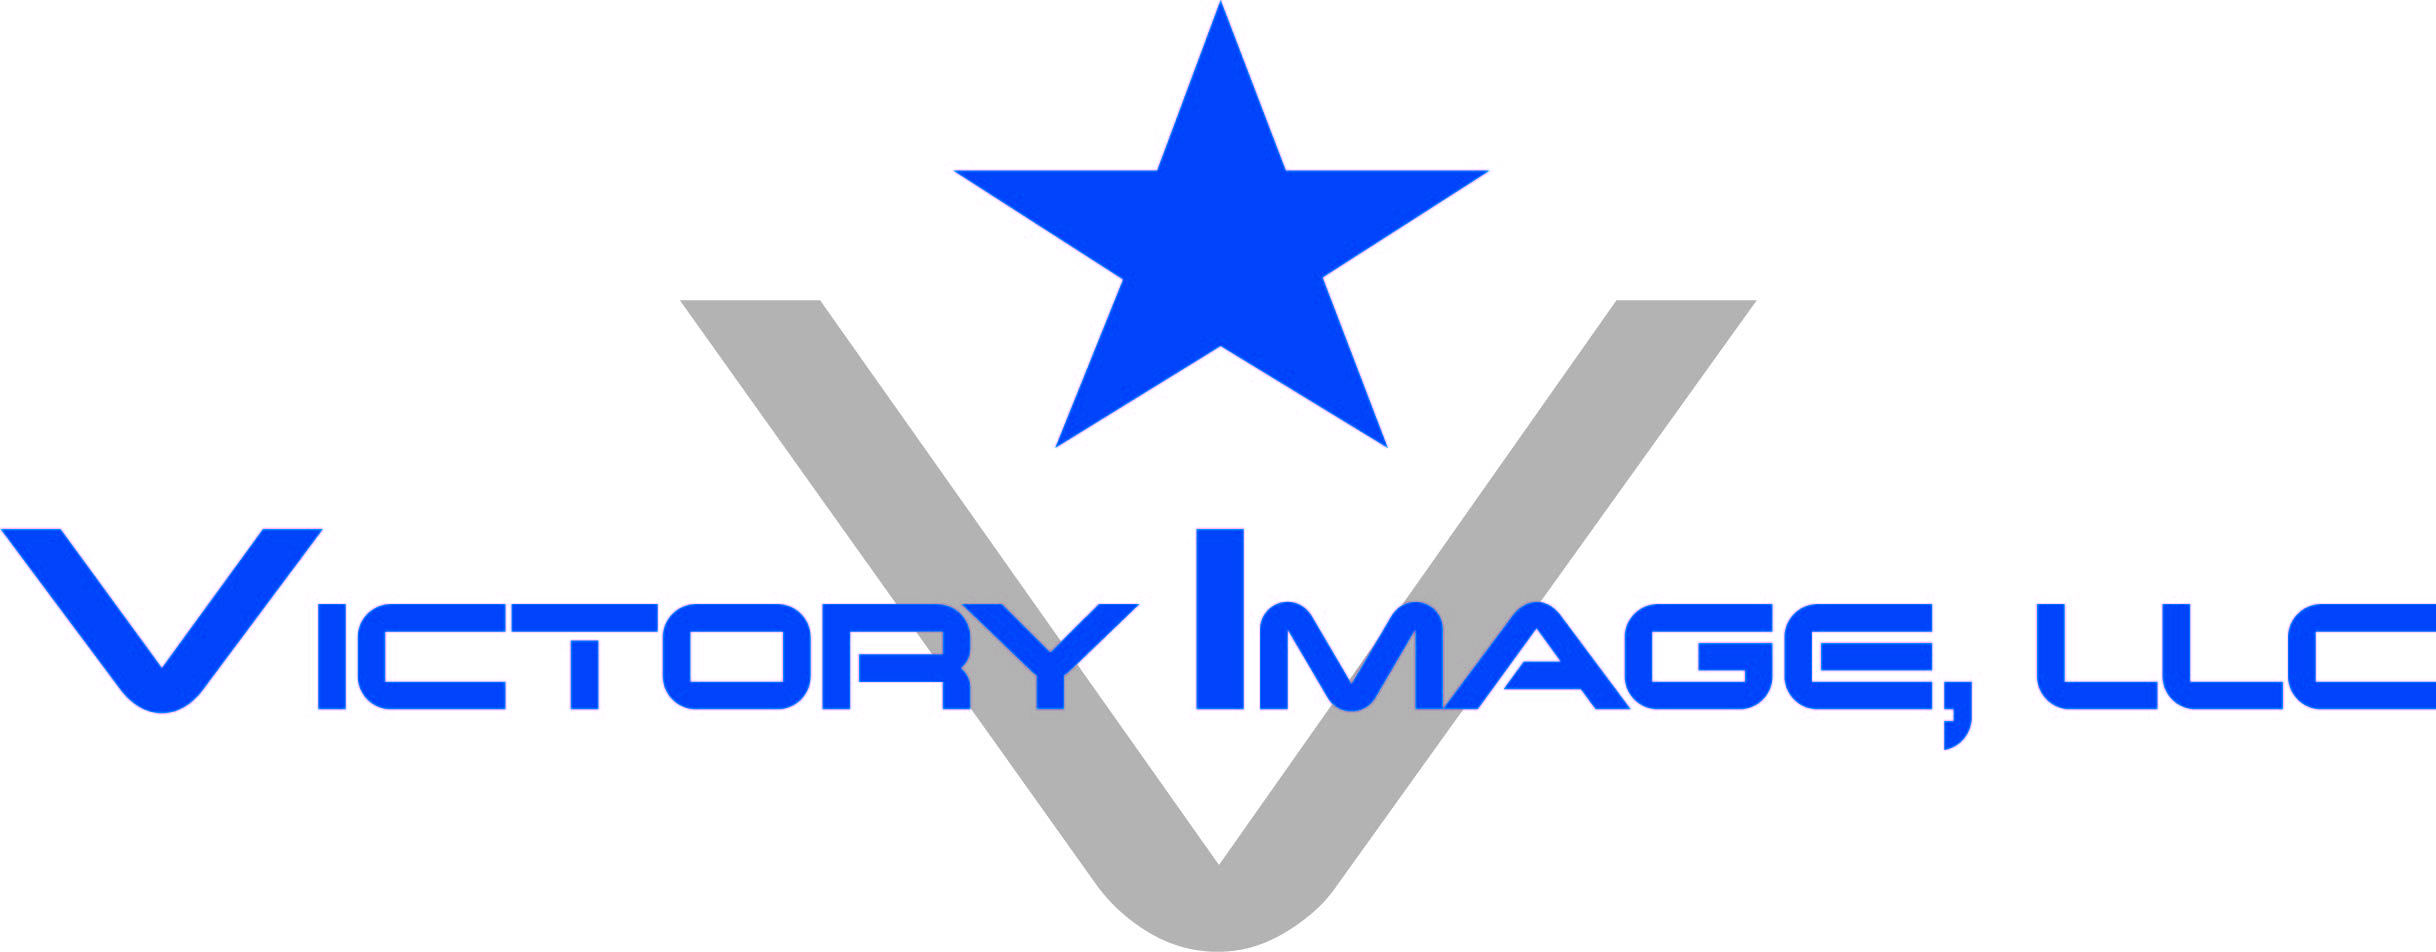 Victory Image LLC's Logo